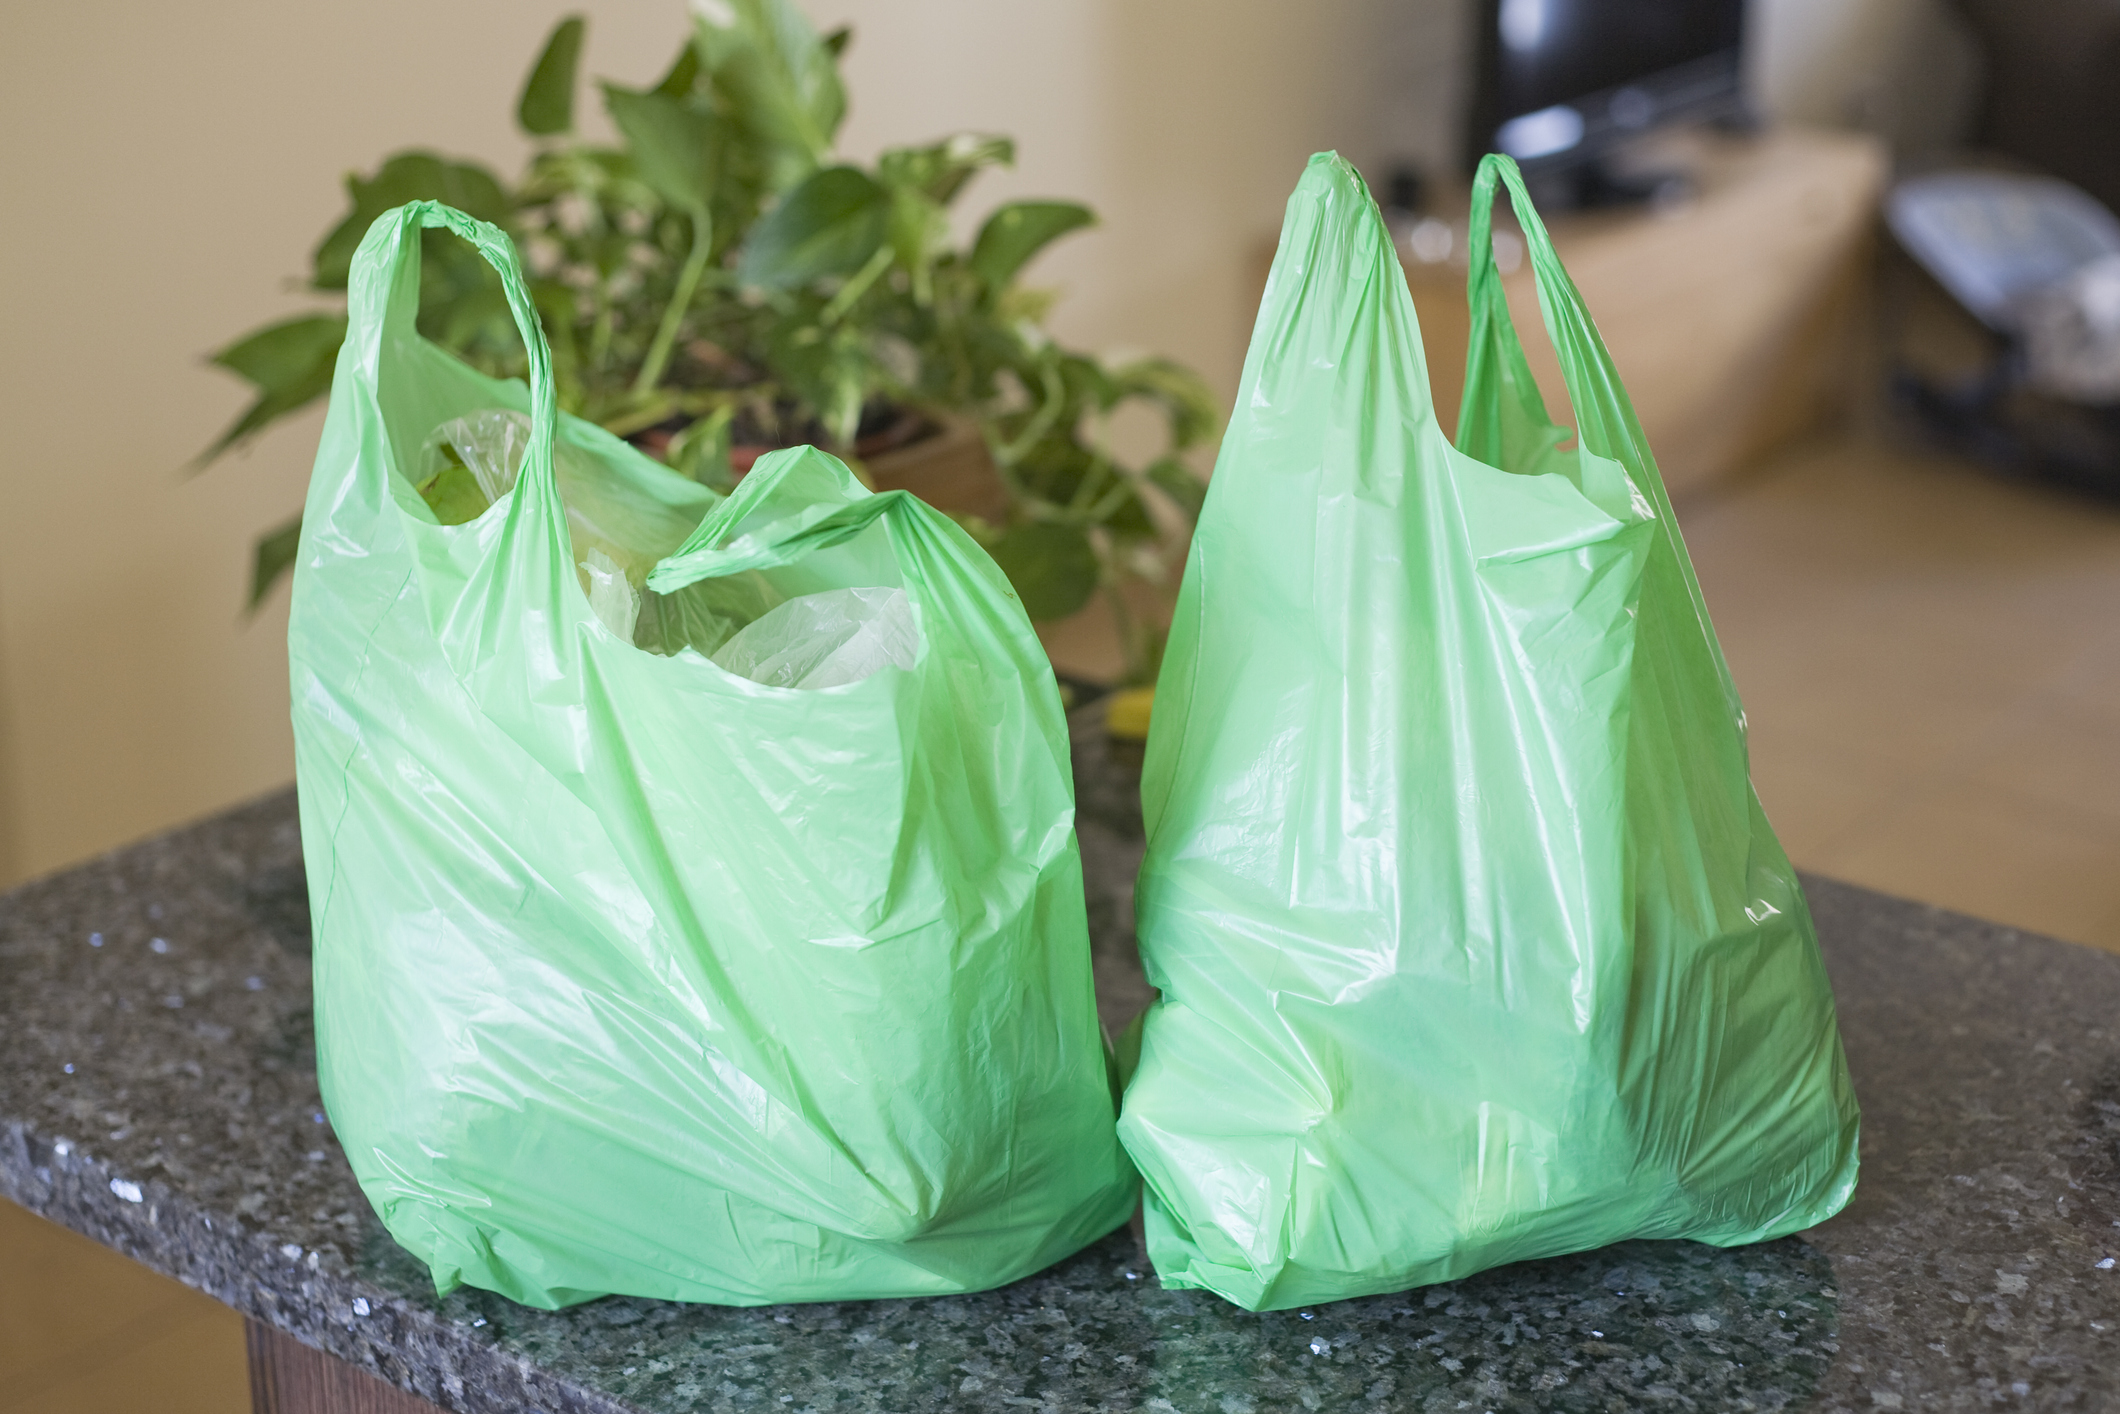 NJ’s plastic ban failed, says report